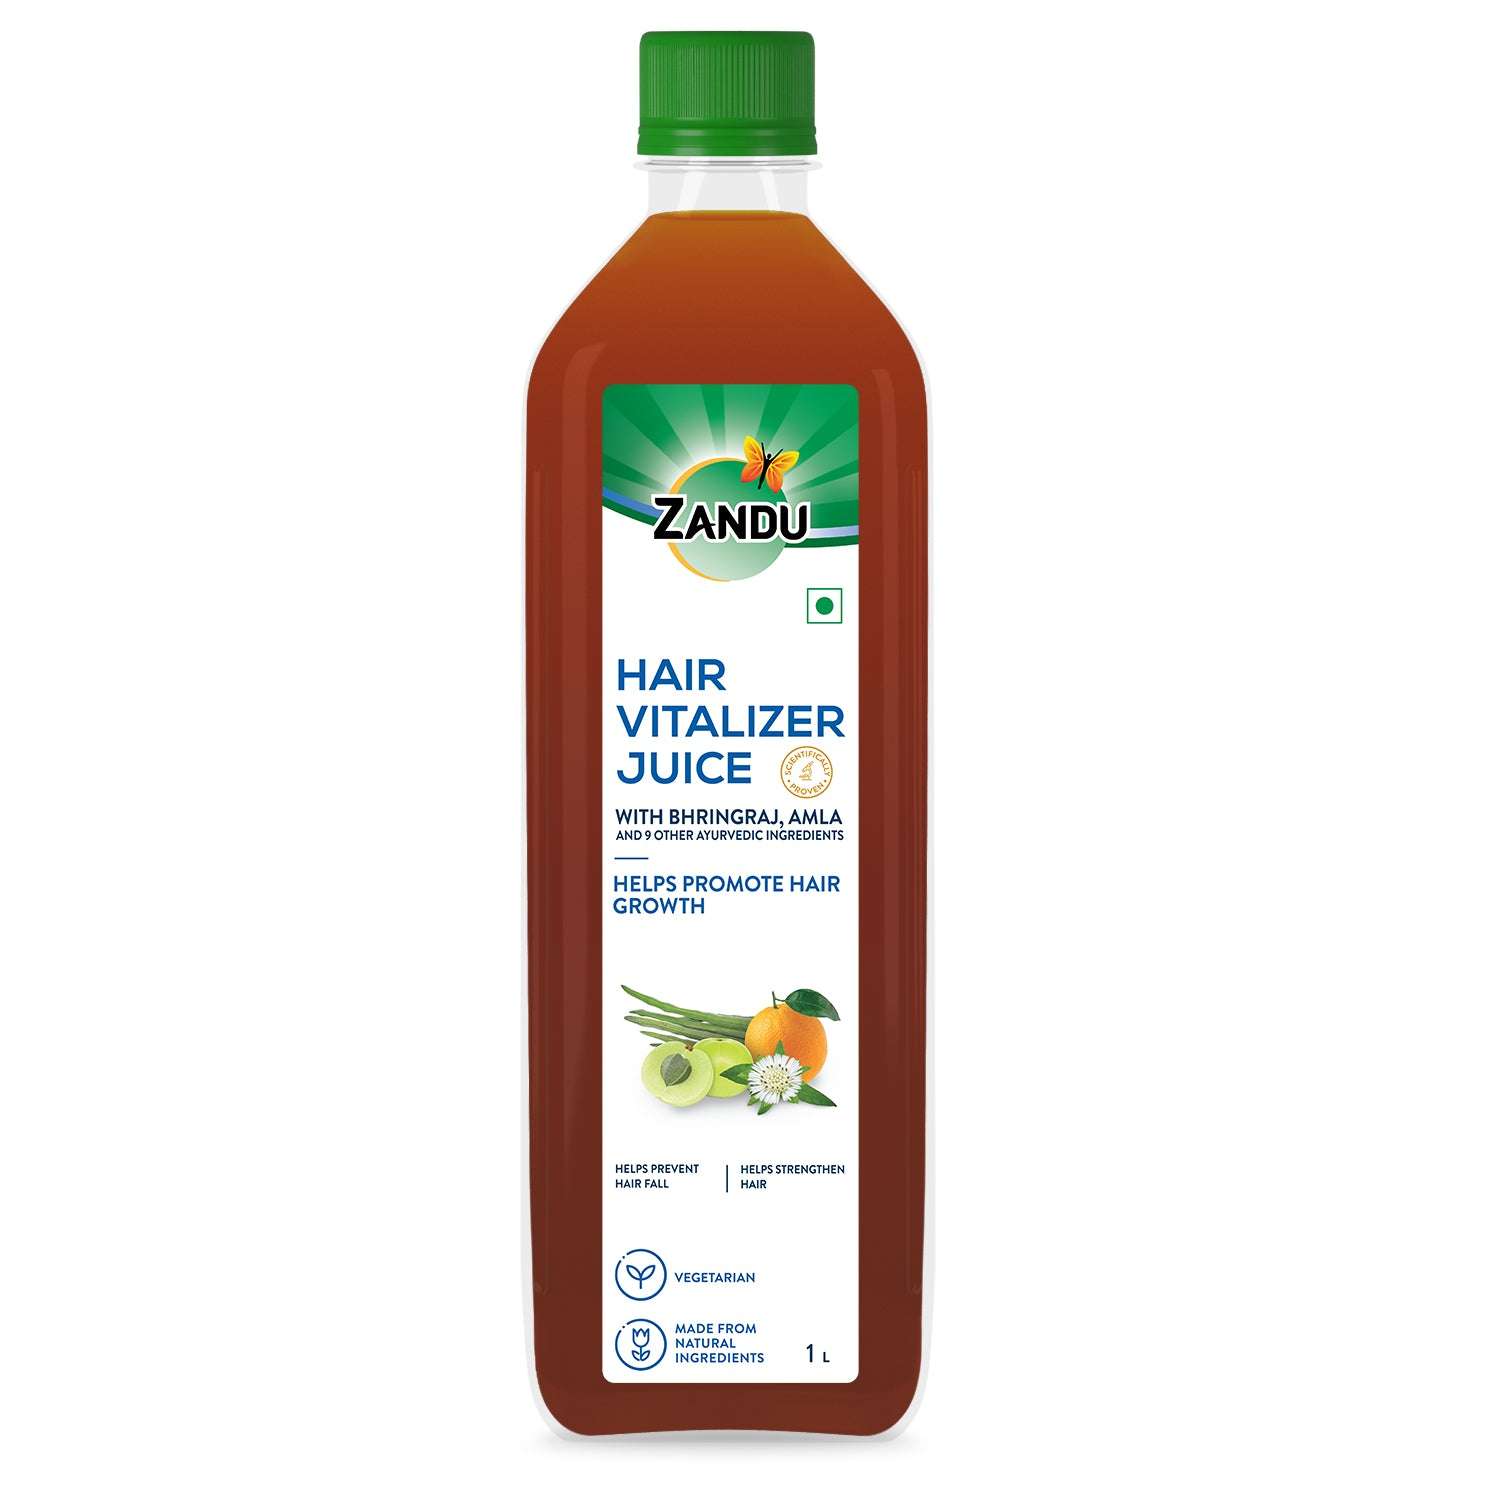 Zandu Hair Vitalizer Juice